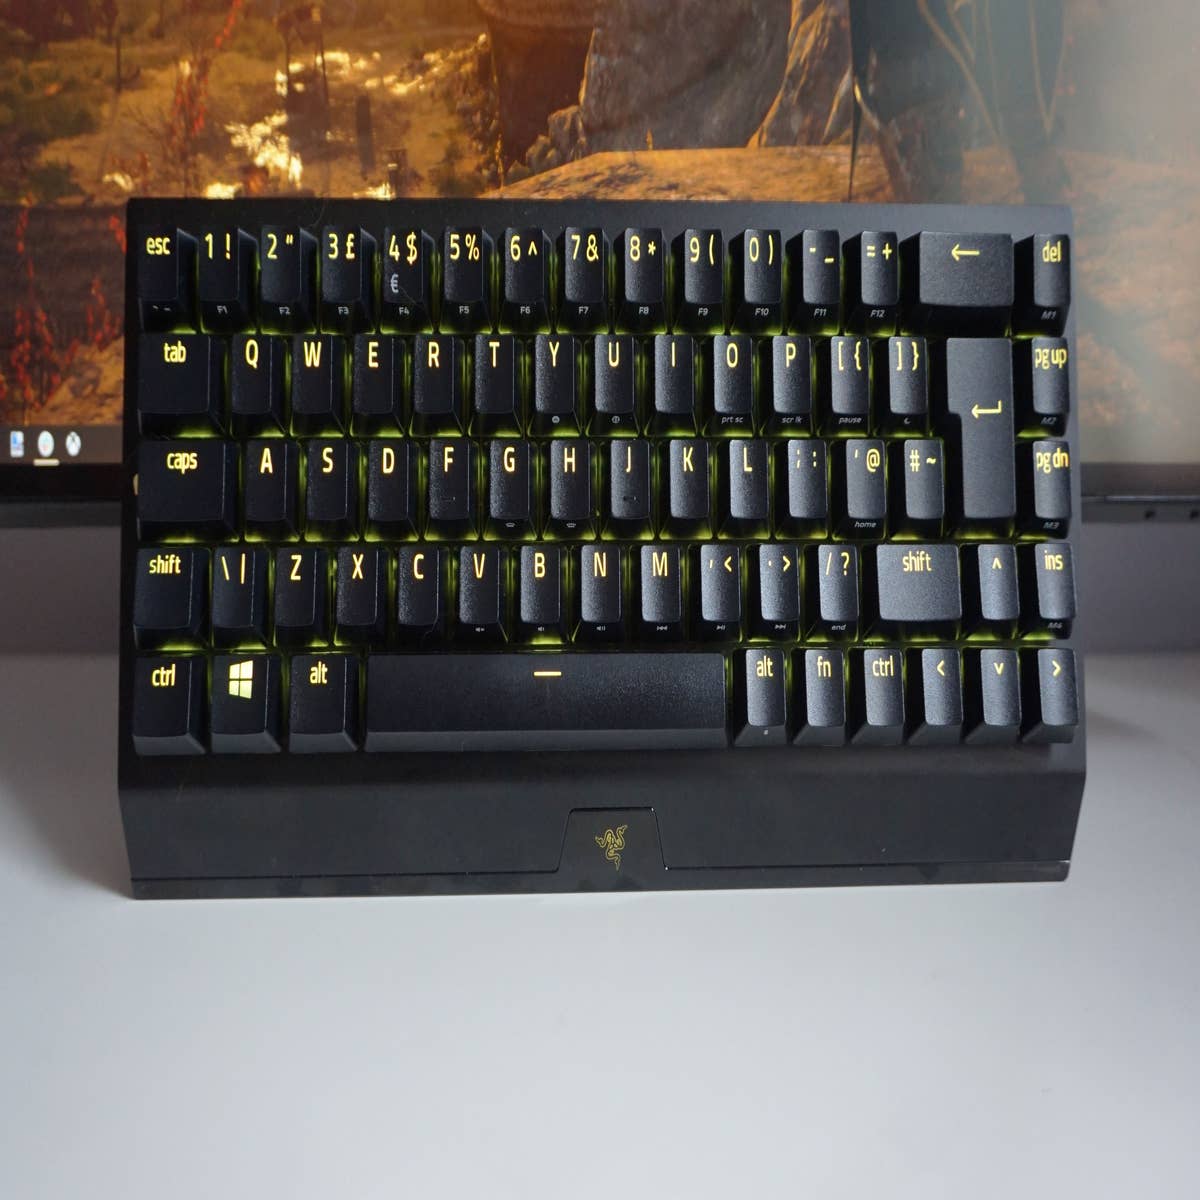 Razer BlackWidow V3 mechanical gaming keyboard, Chroma RGB lighting, Black